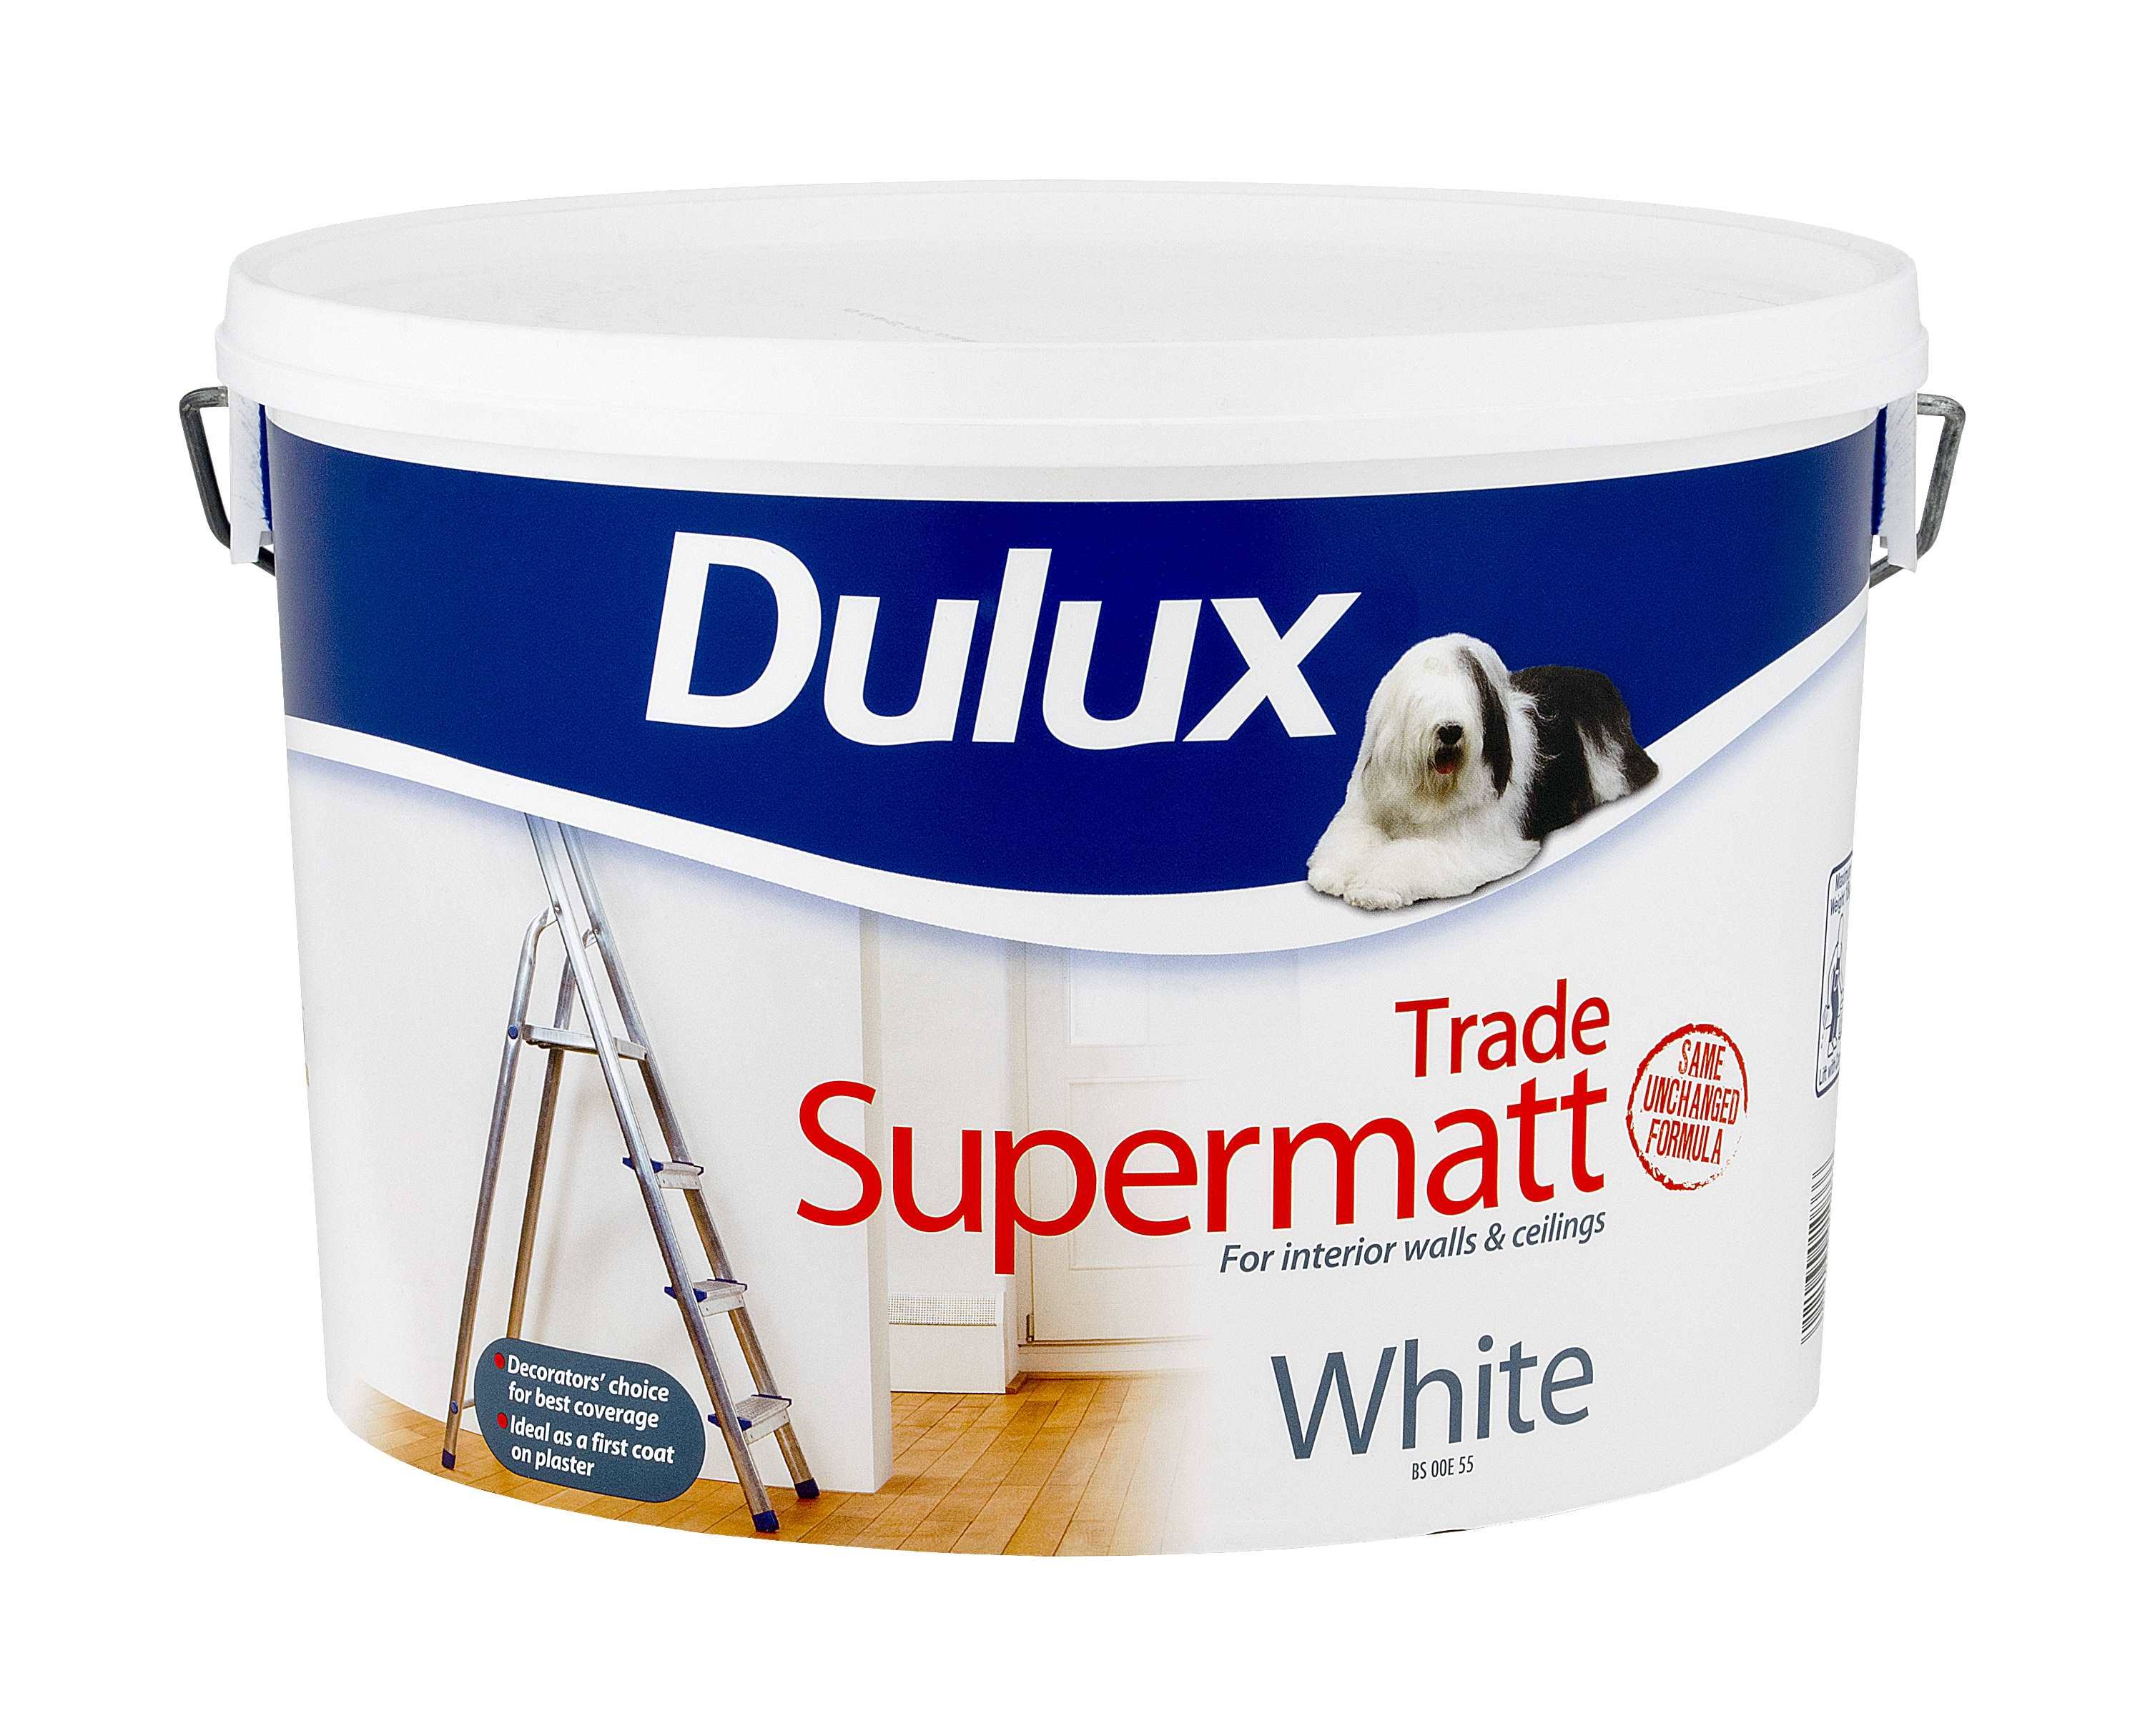 Dulux Trade Supermatt Paint - White